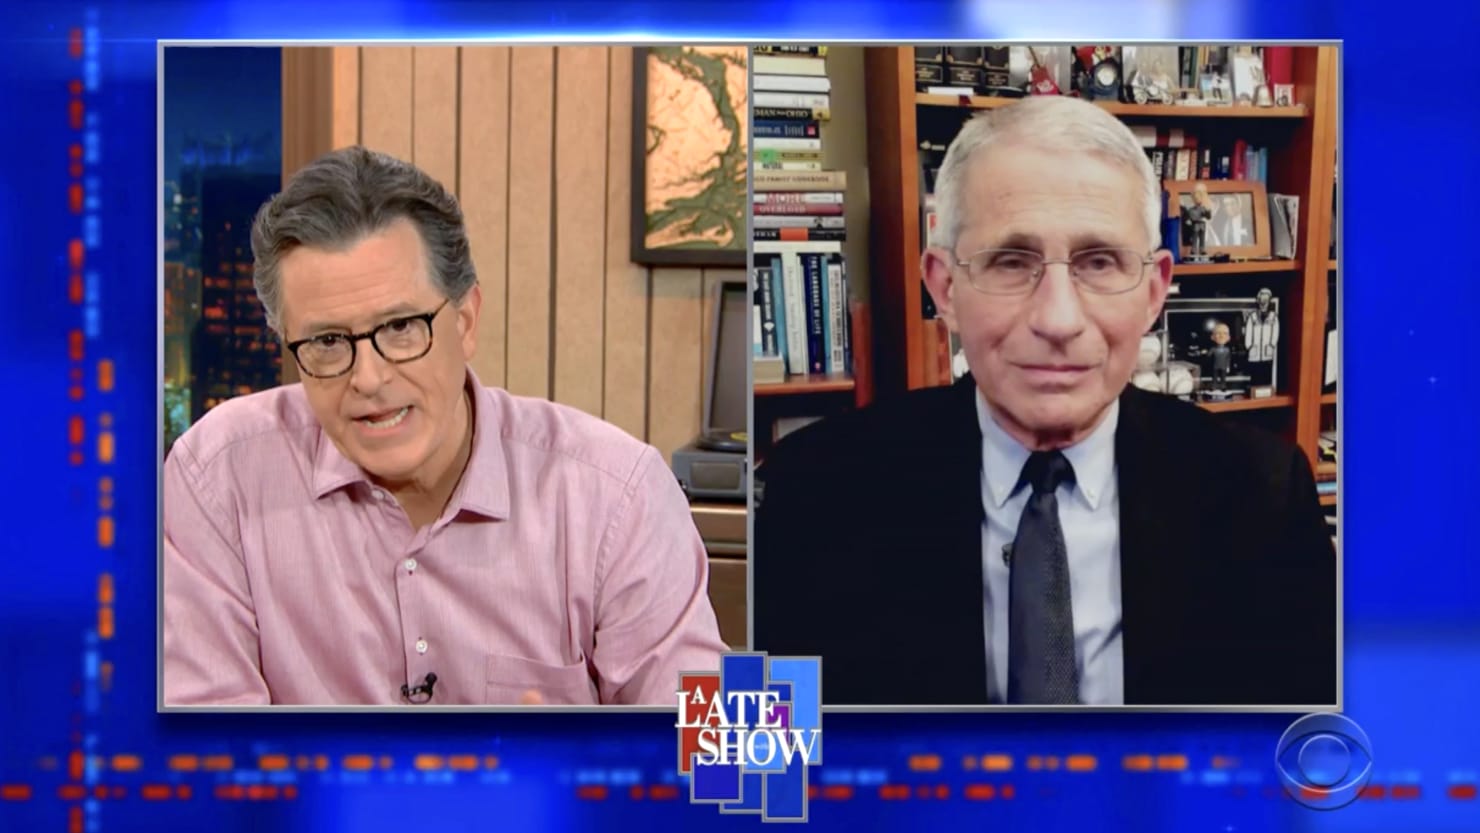 Dr. Fauci tells Stephen Colbert, “Everything has changed under Biden.”